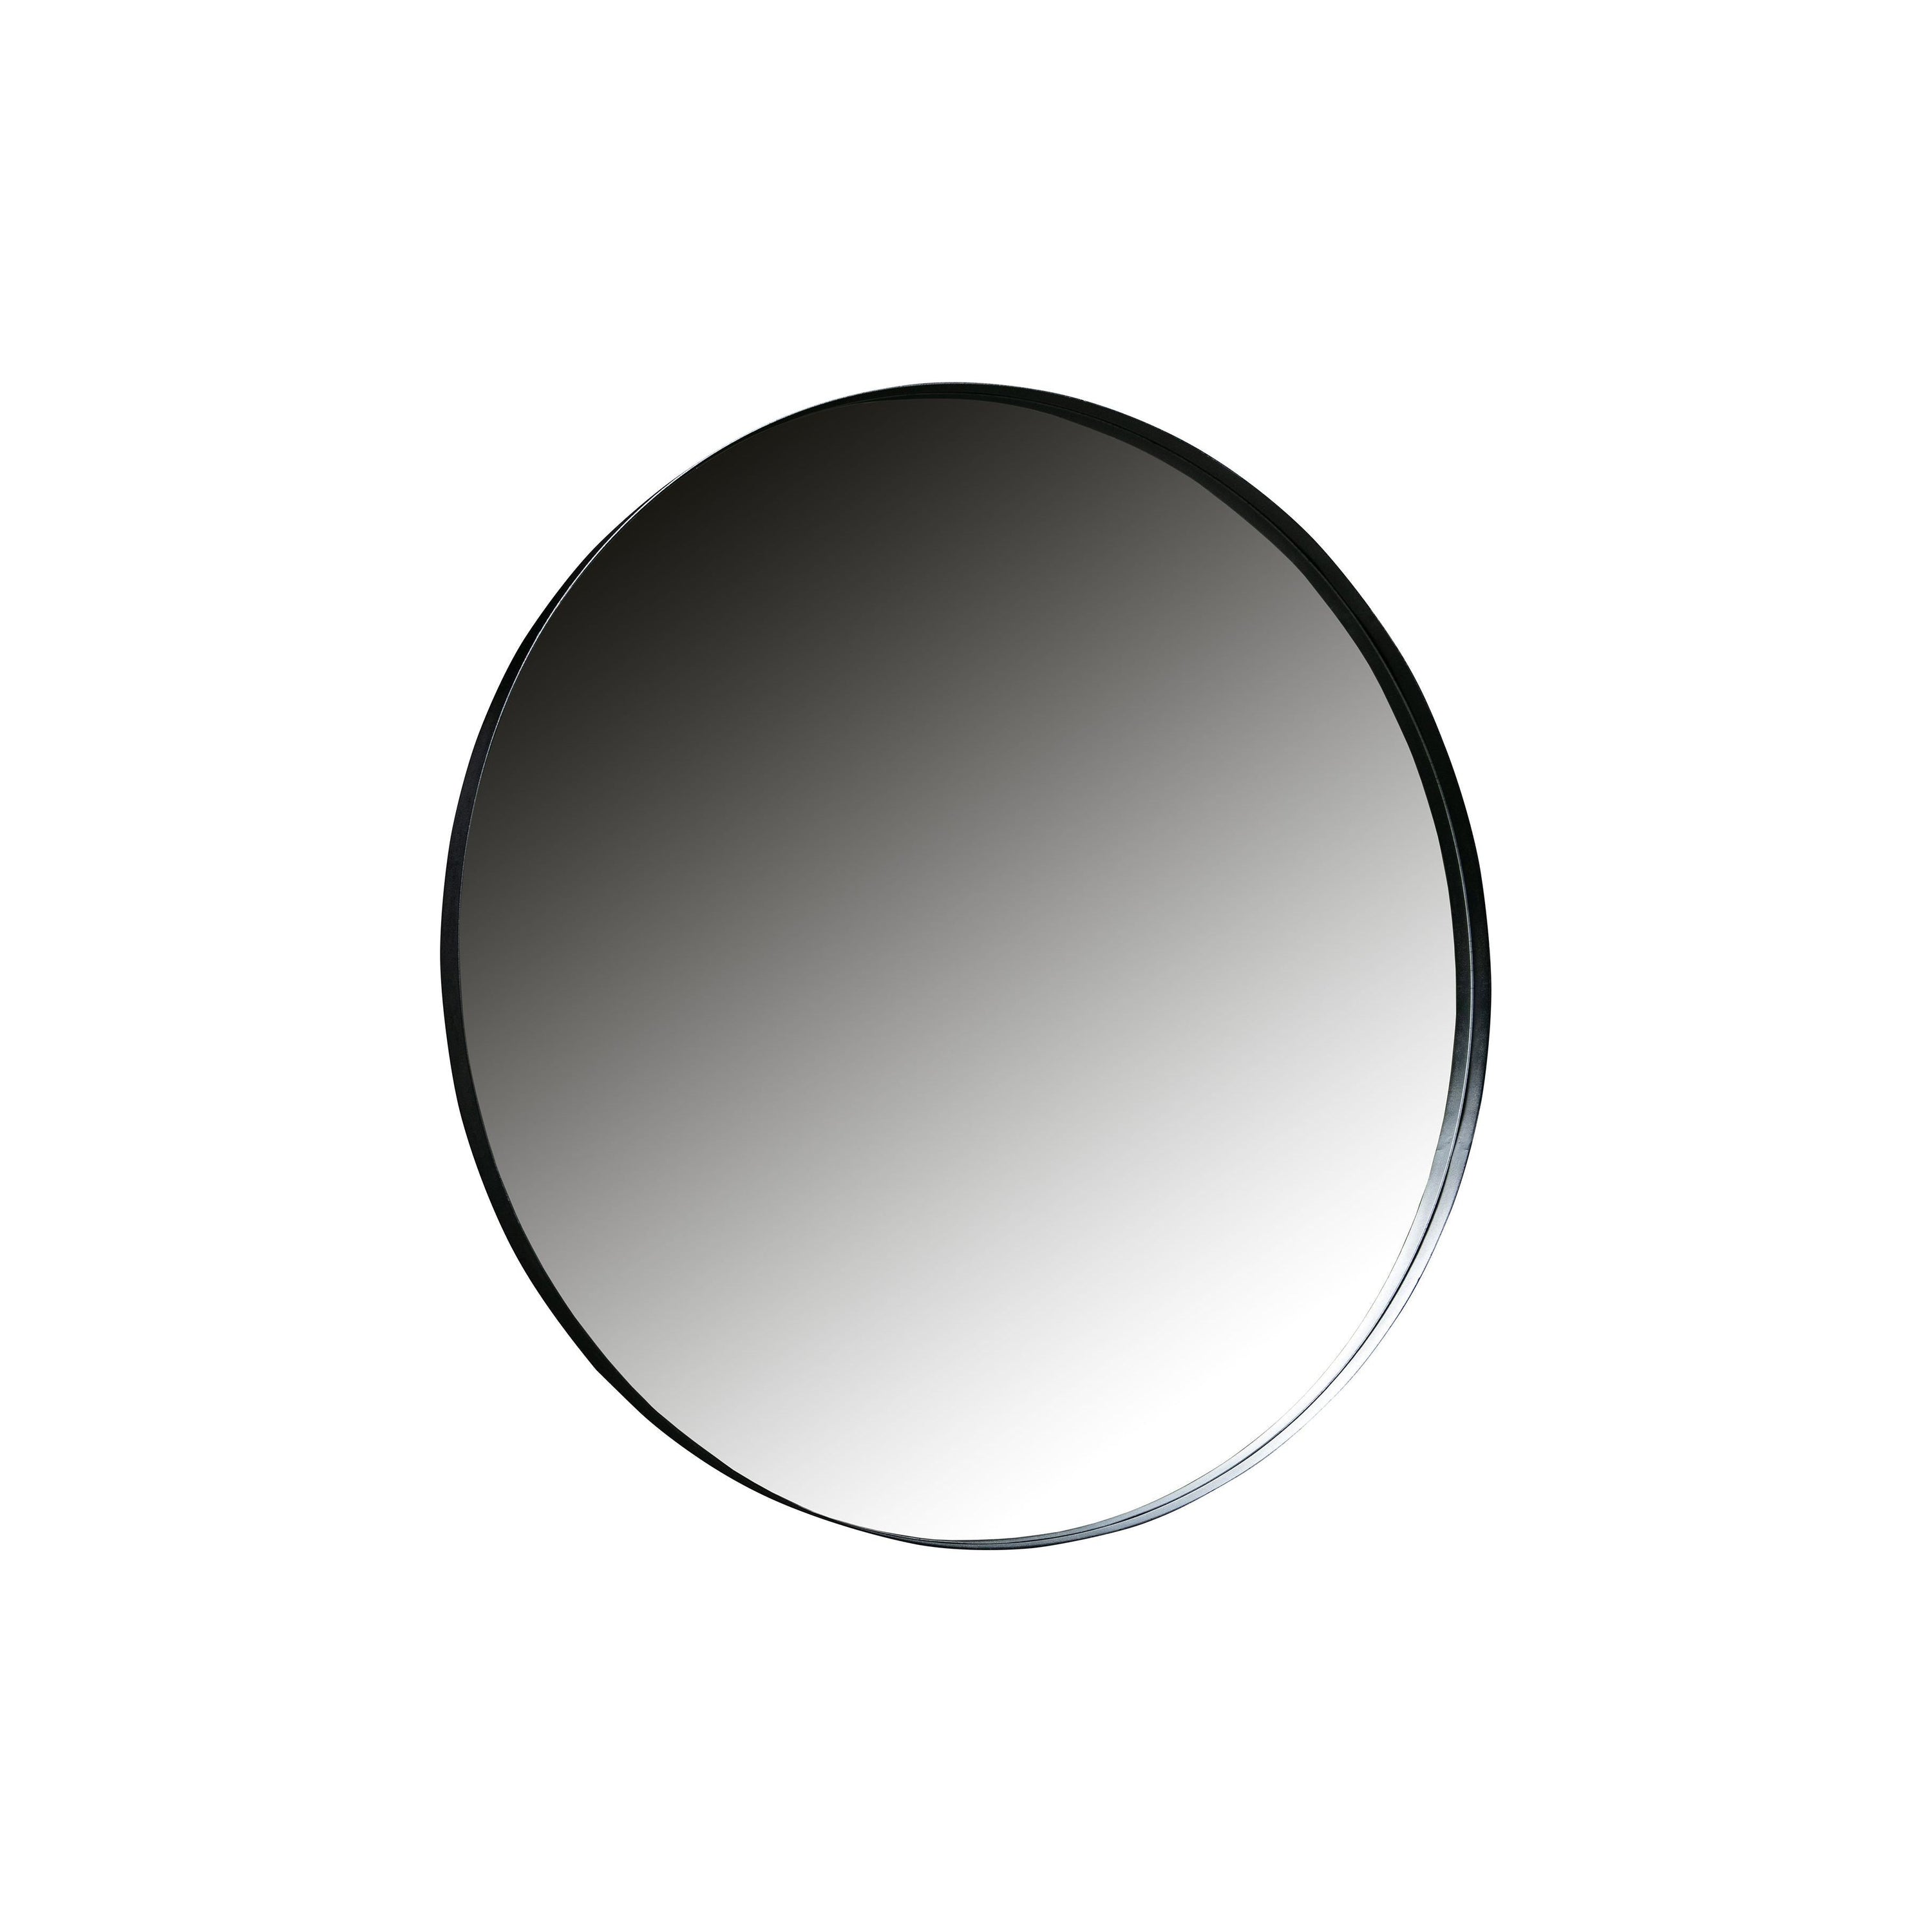 "DOUTZEN" apvalus sieninis veidrodis, juoda spalva, Ø115 cm